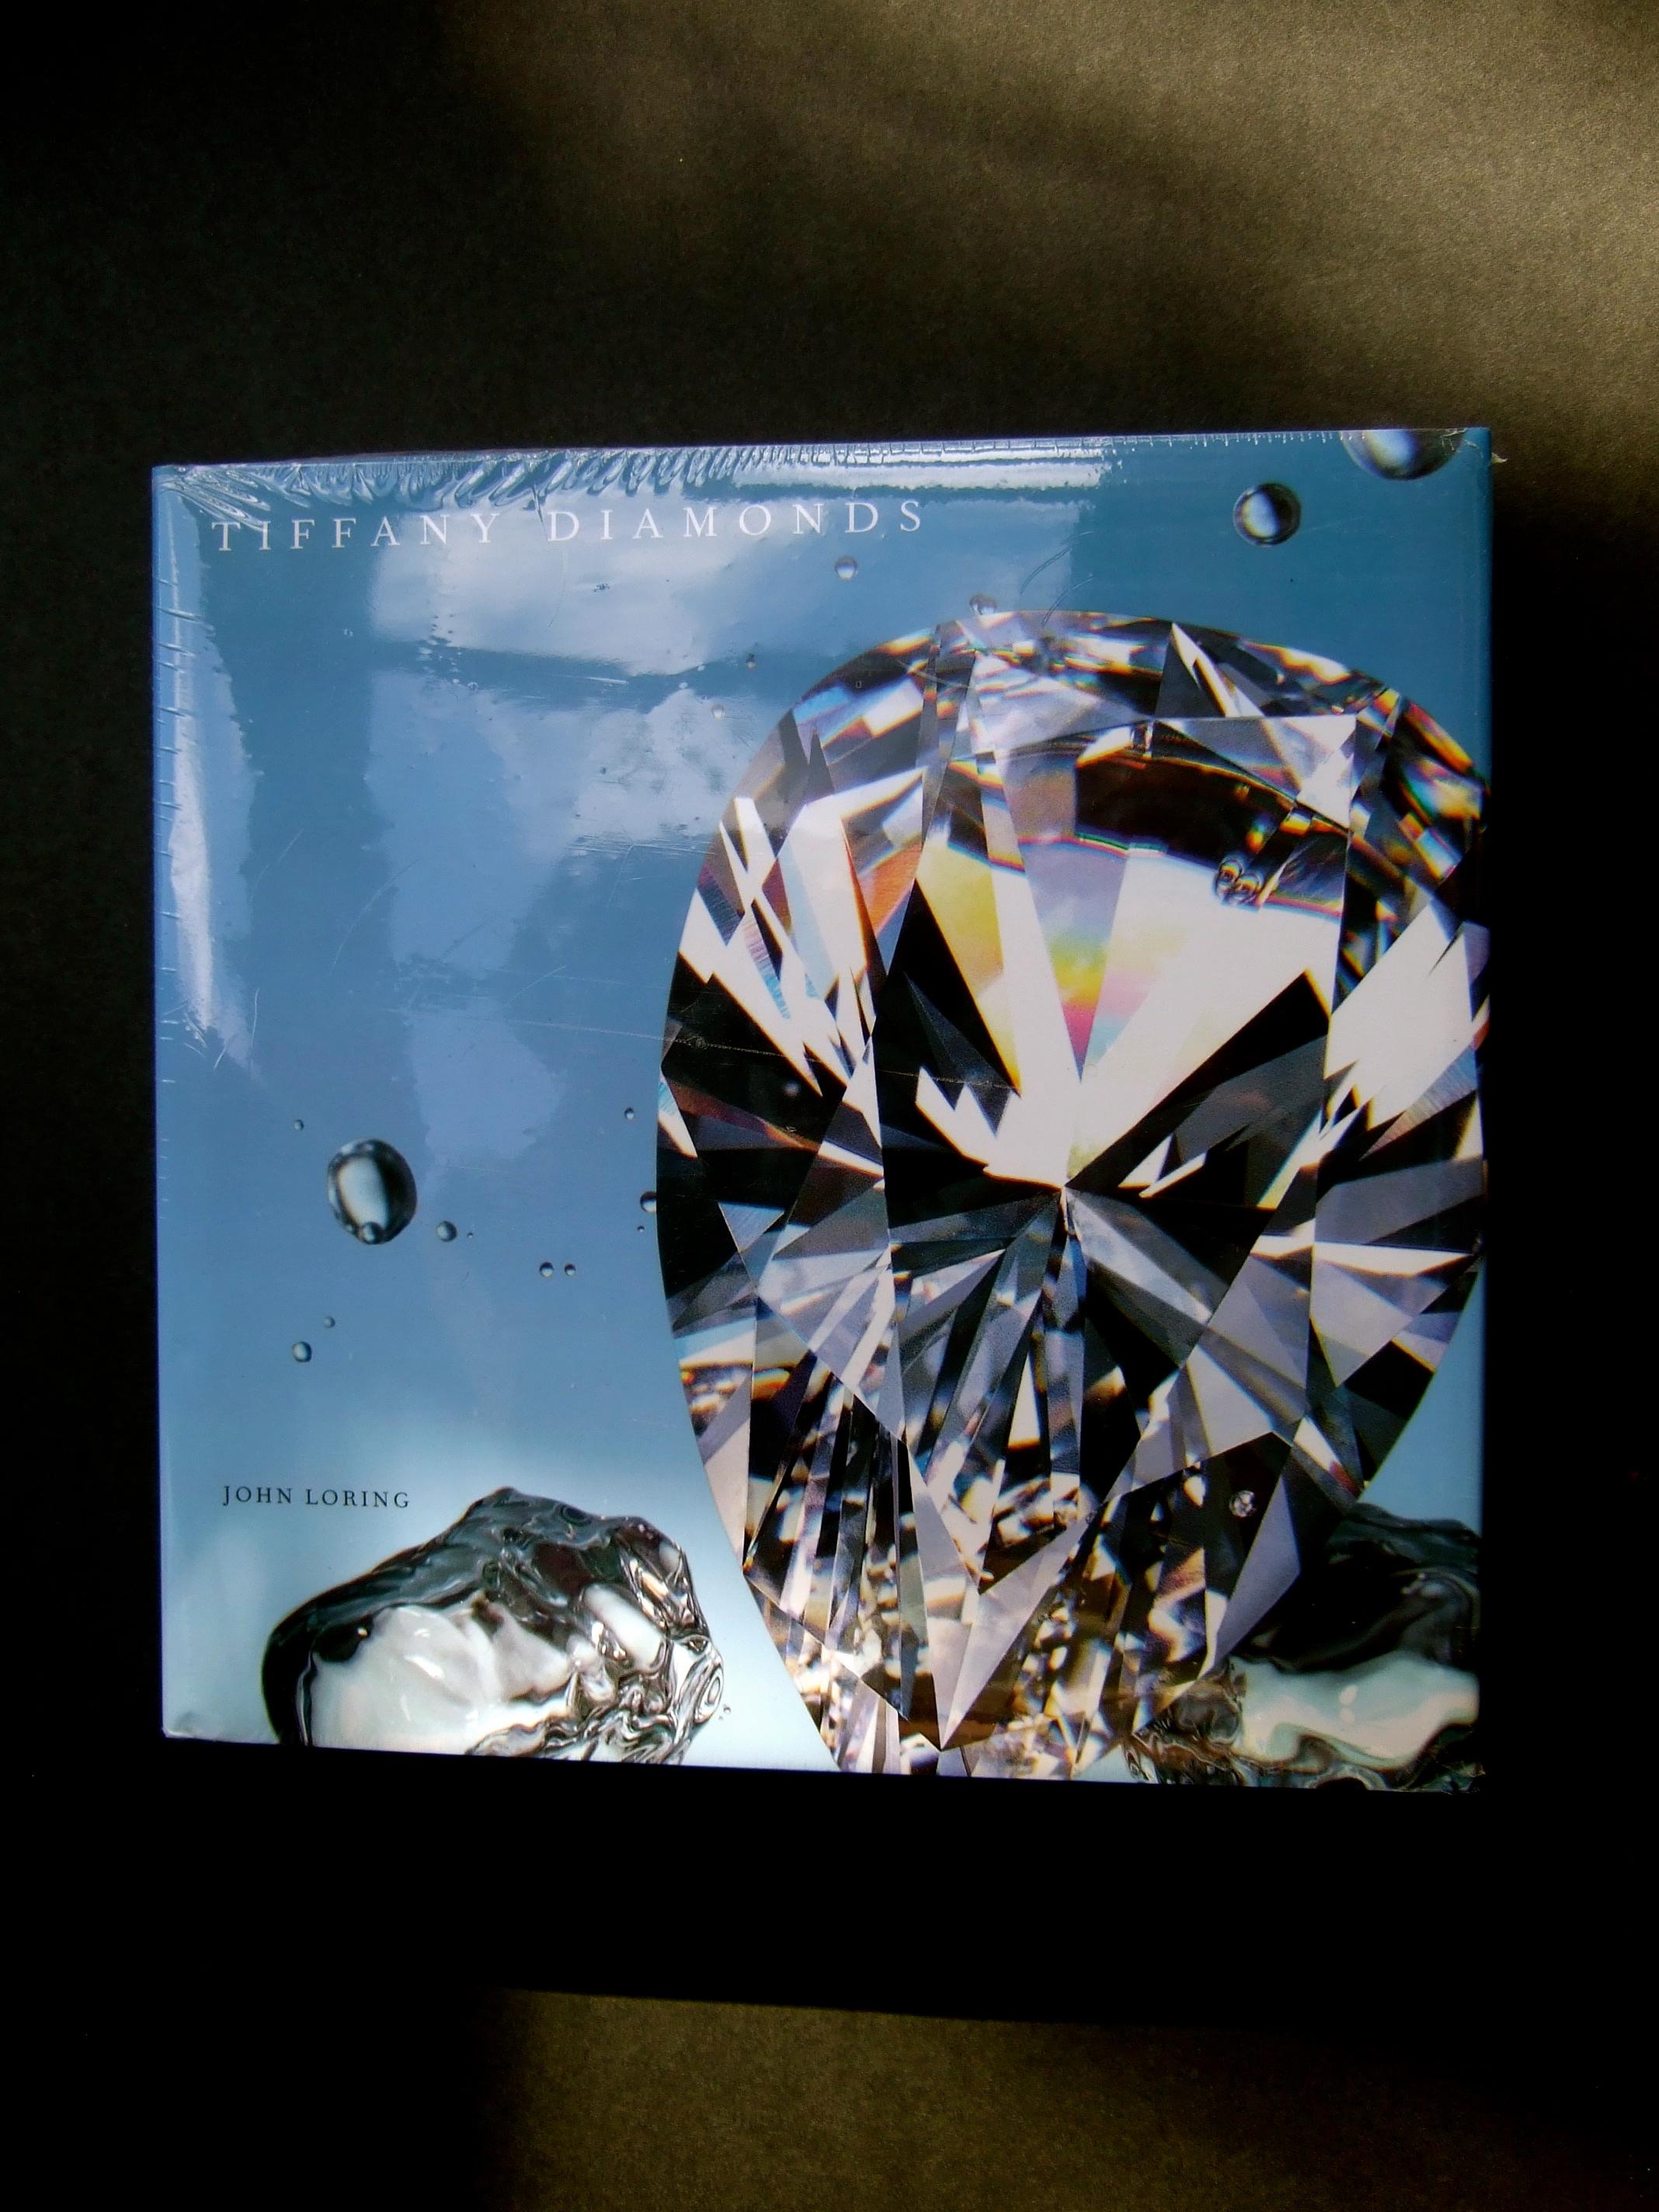 Tiffany Diamonds Hardcover Sealed New Book in Tiffany Box by John Loring c 2005 1